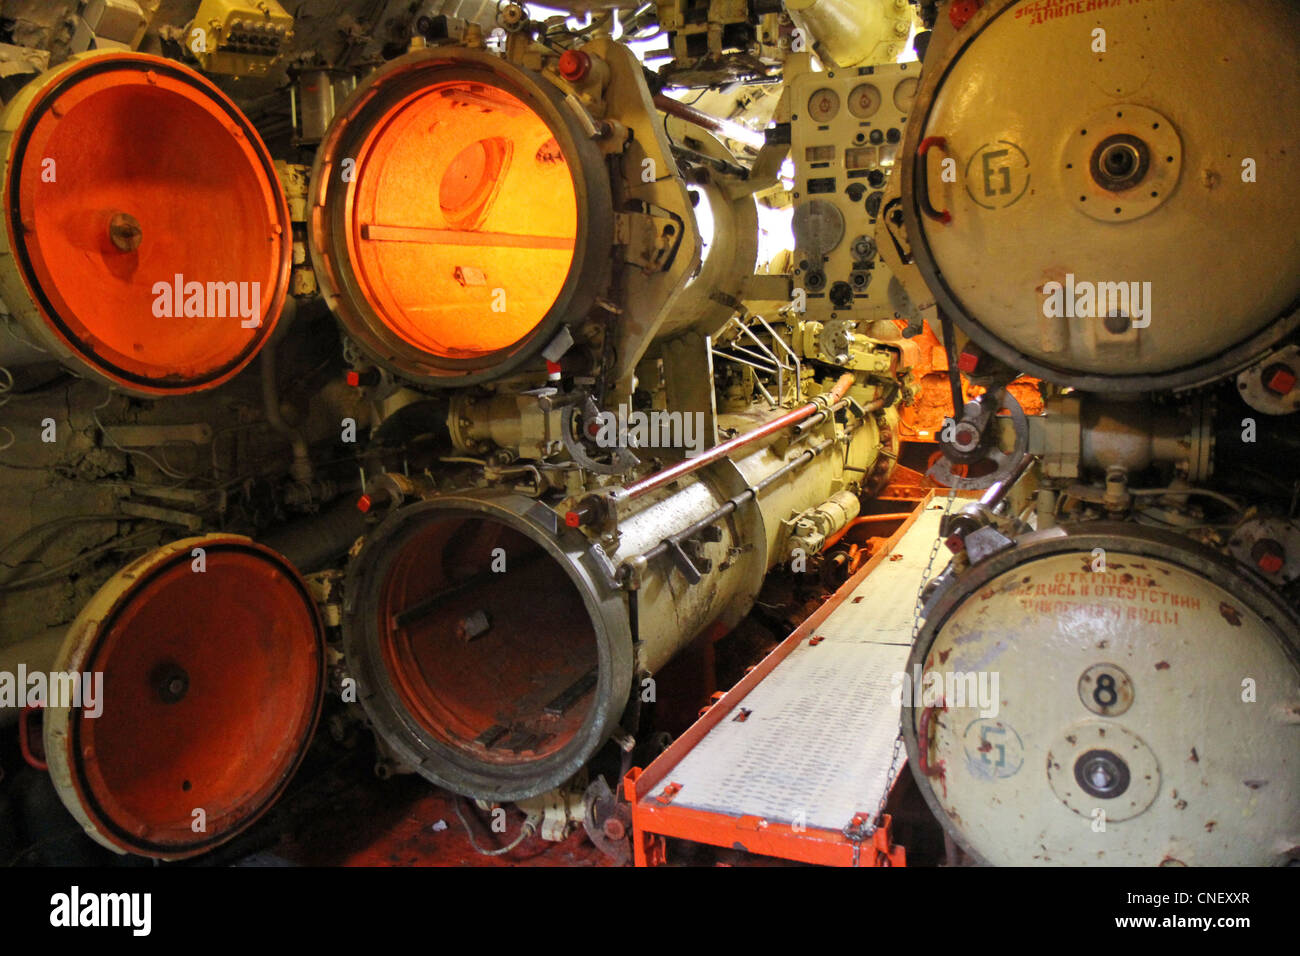 Inside the Foxtrot Russian Submarine in Seafront Museum in Zeebrugge, Belgium. Stock Photo